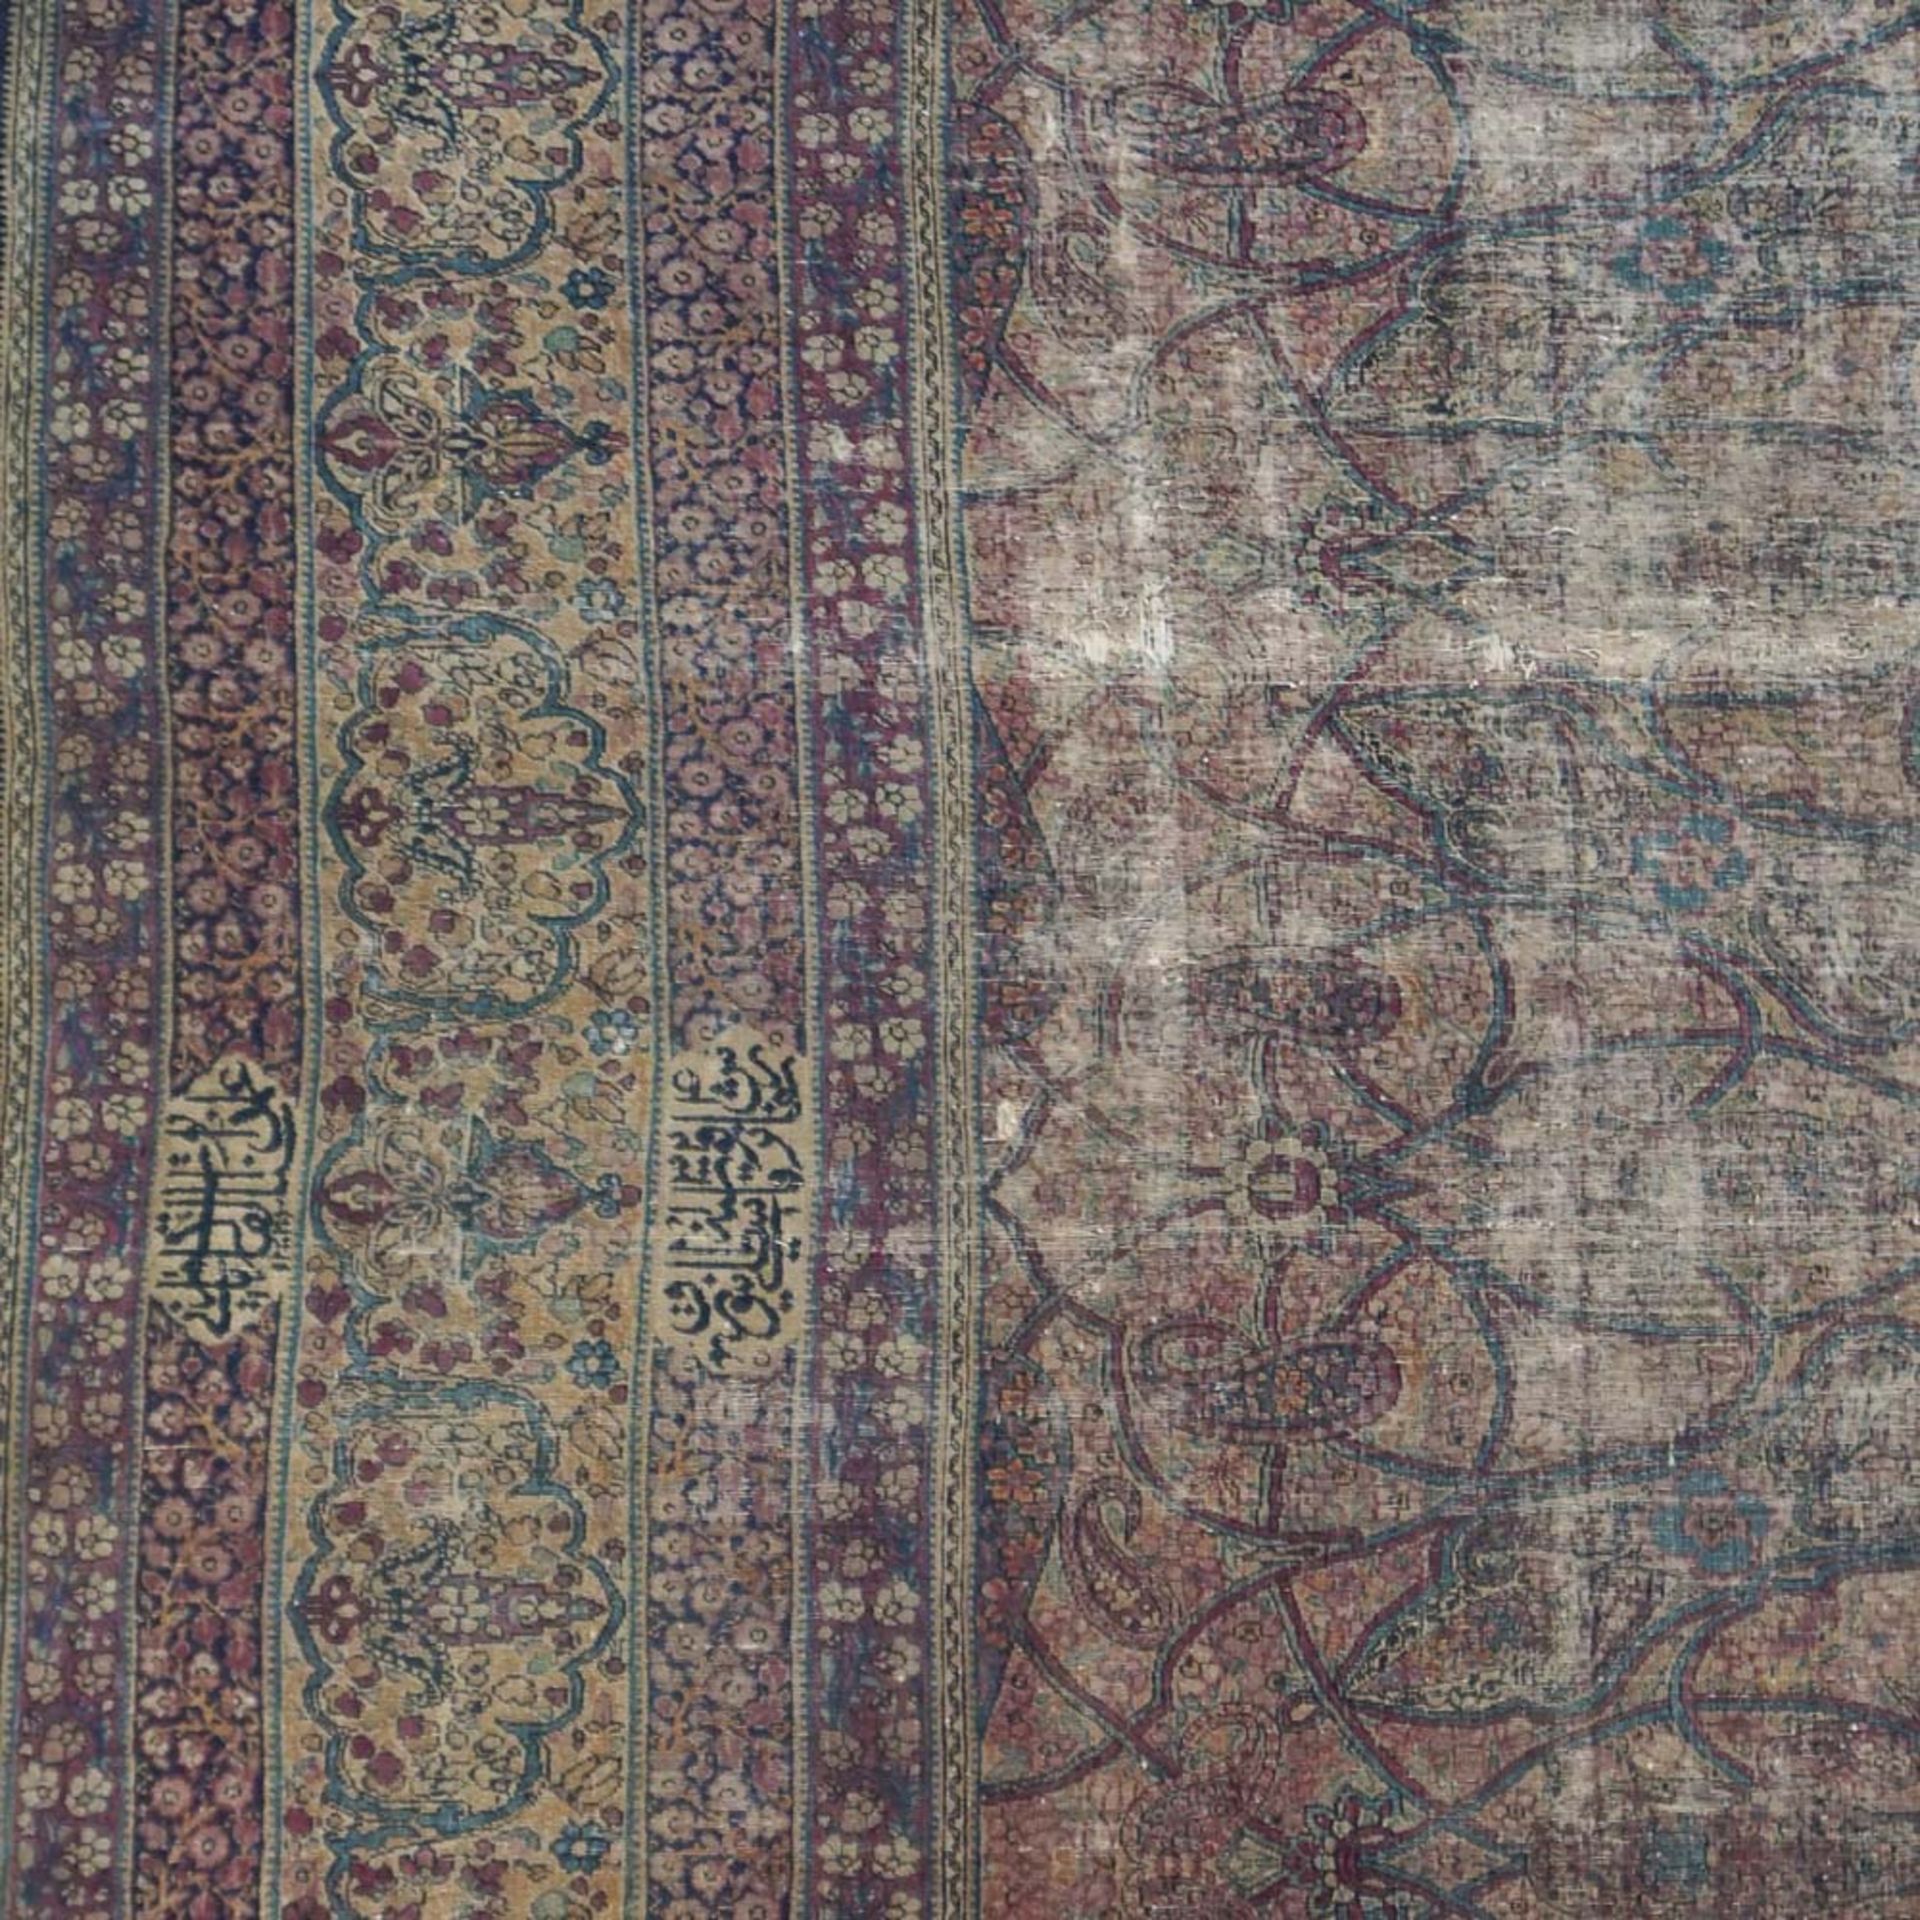 Kirman Lavel carpet Persia, 19th century 410x270 cm. - Image 2 of 2